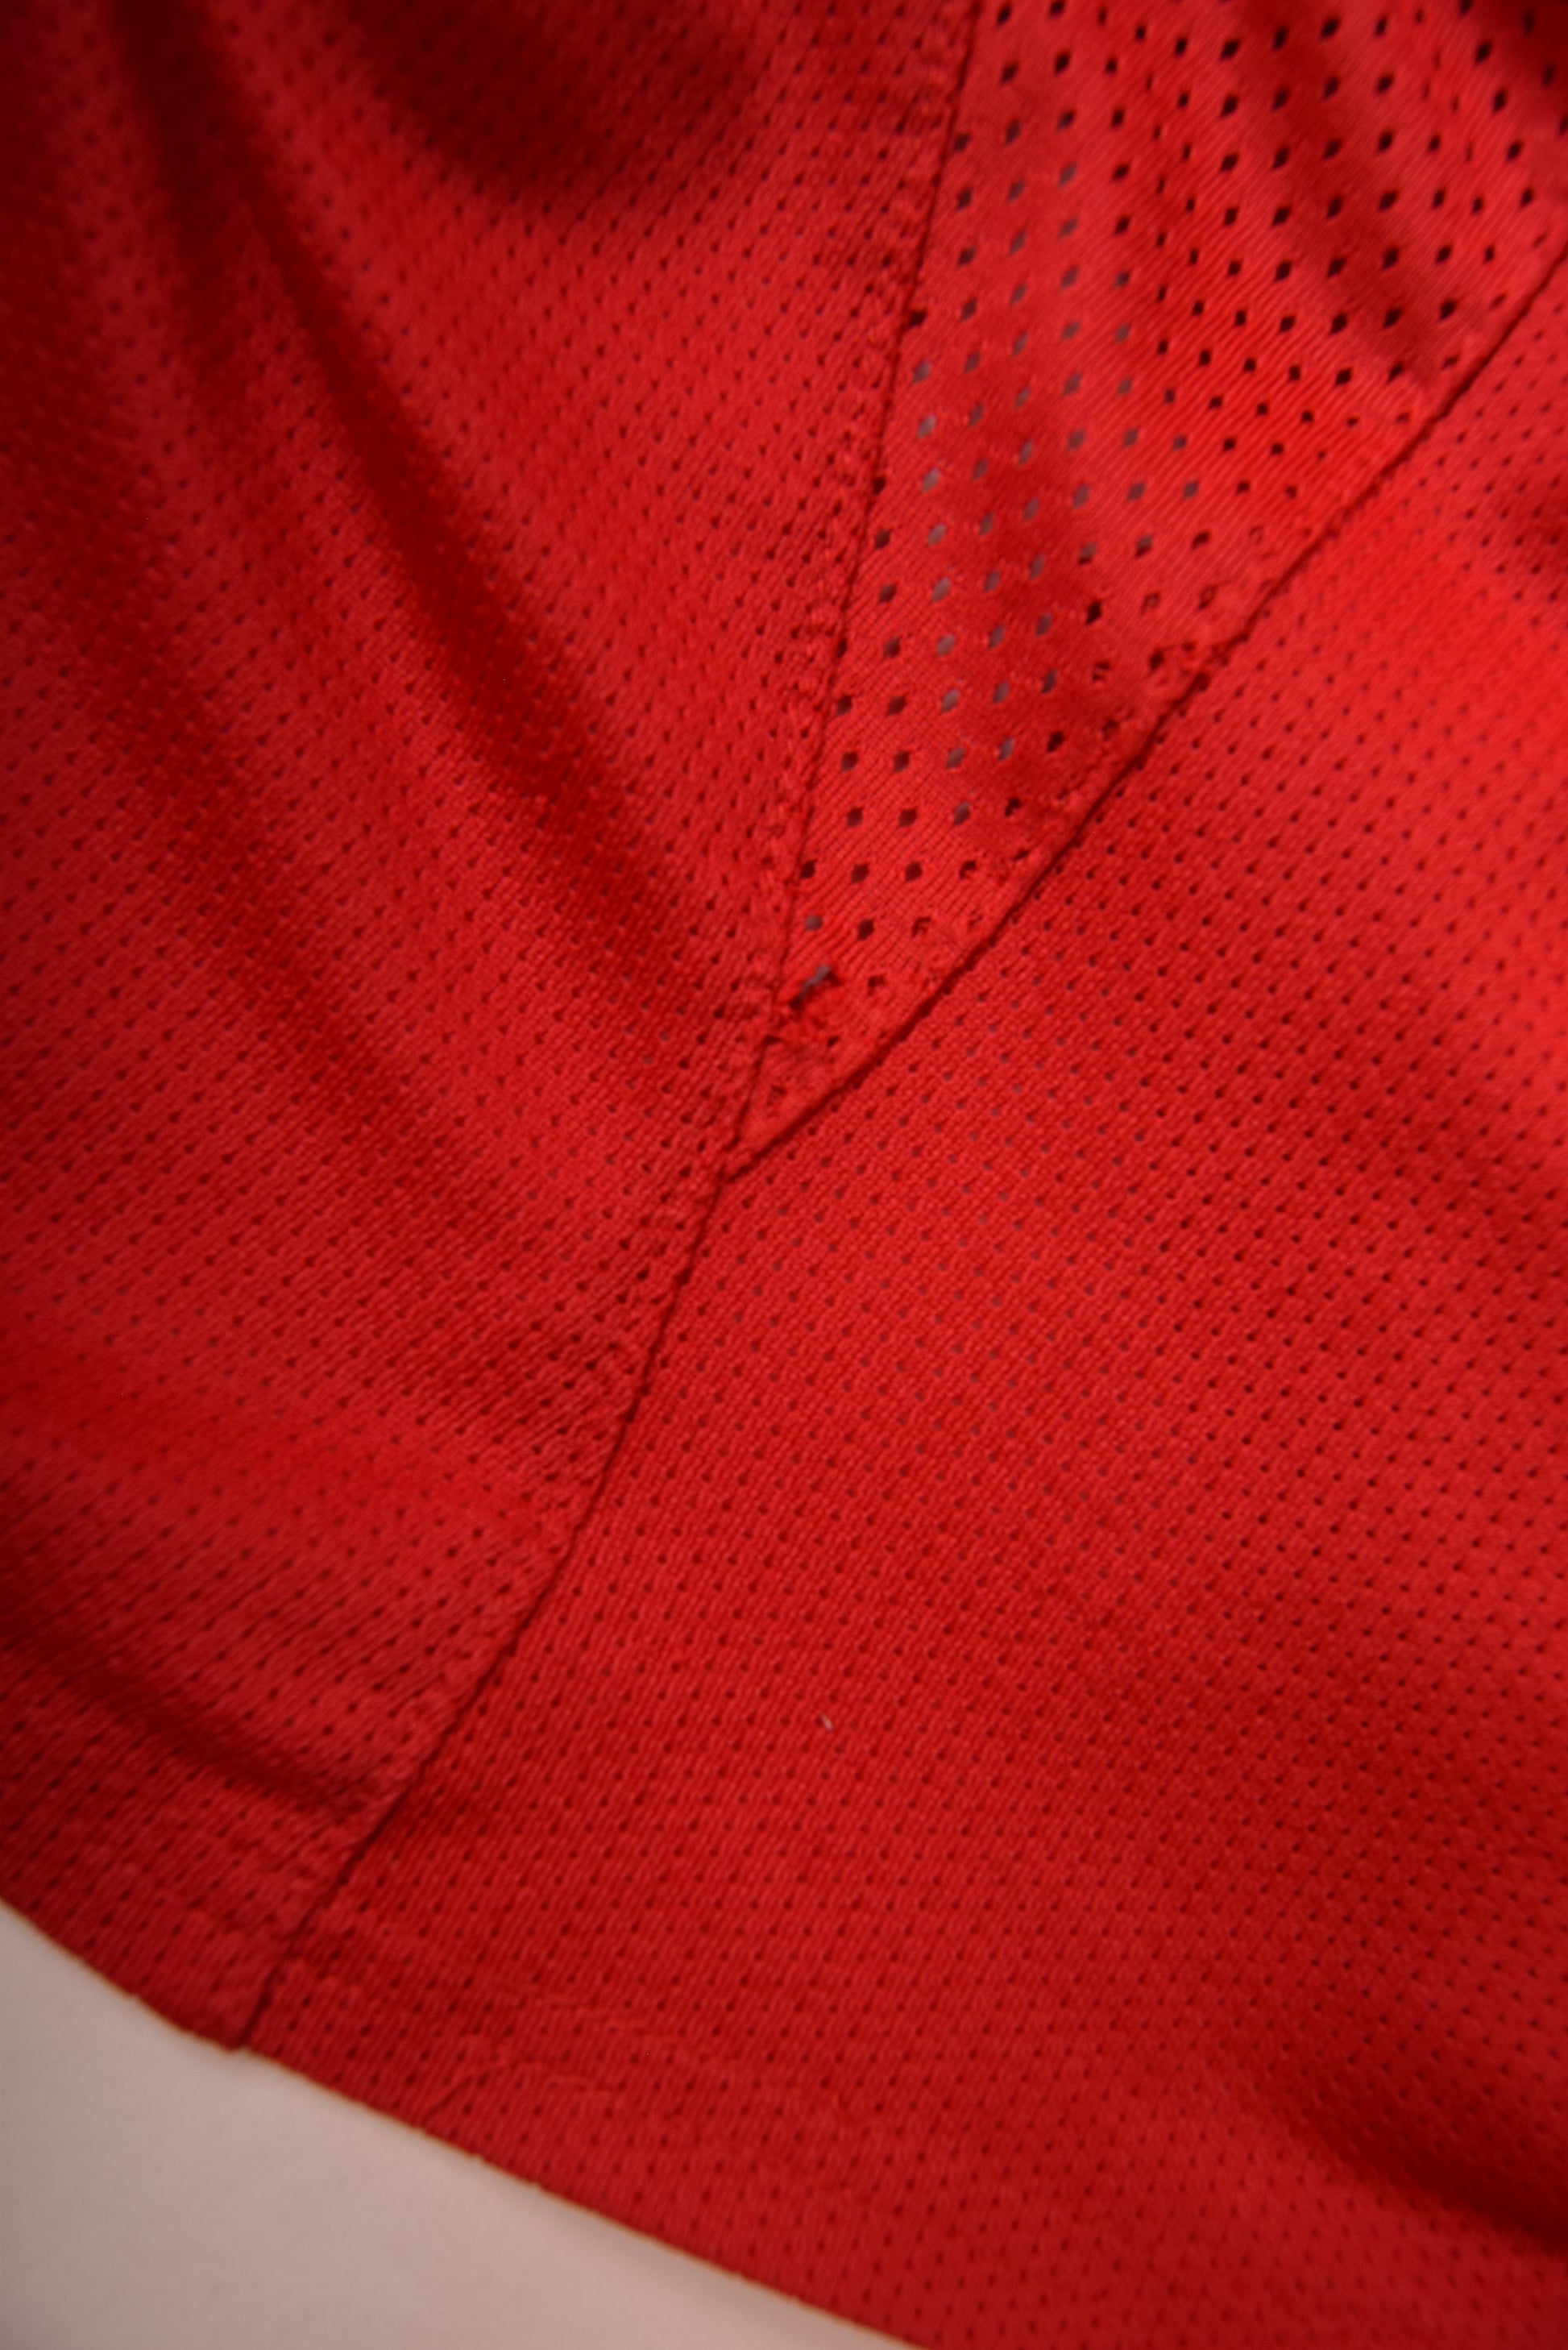 Nike Manchester United '04-'06 Cristiano Ronaldo Football Shirt Home #7 Red Vodafone 